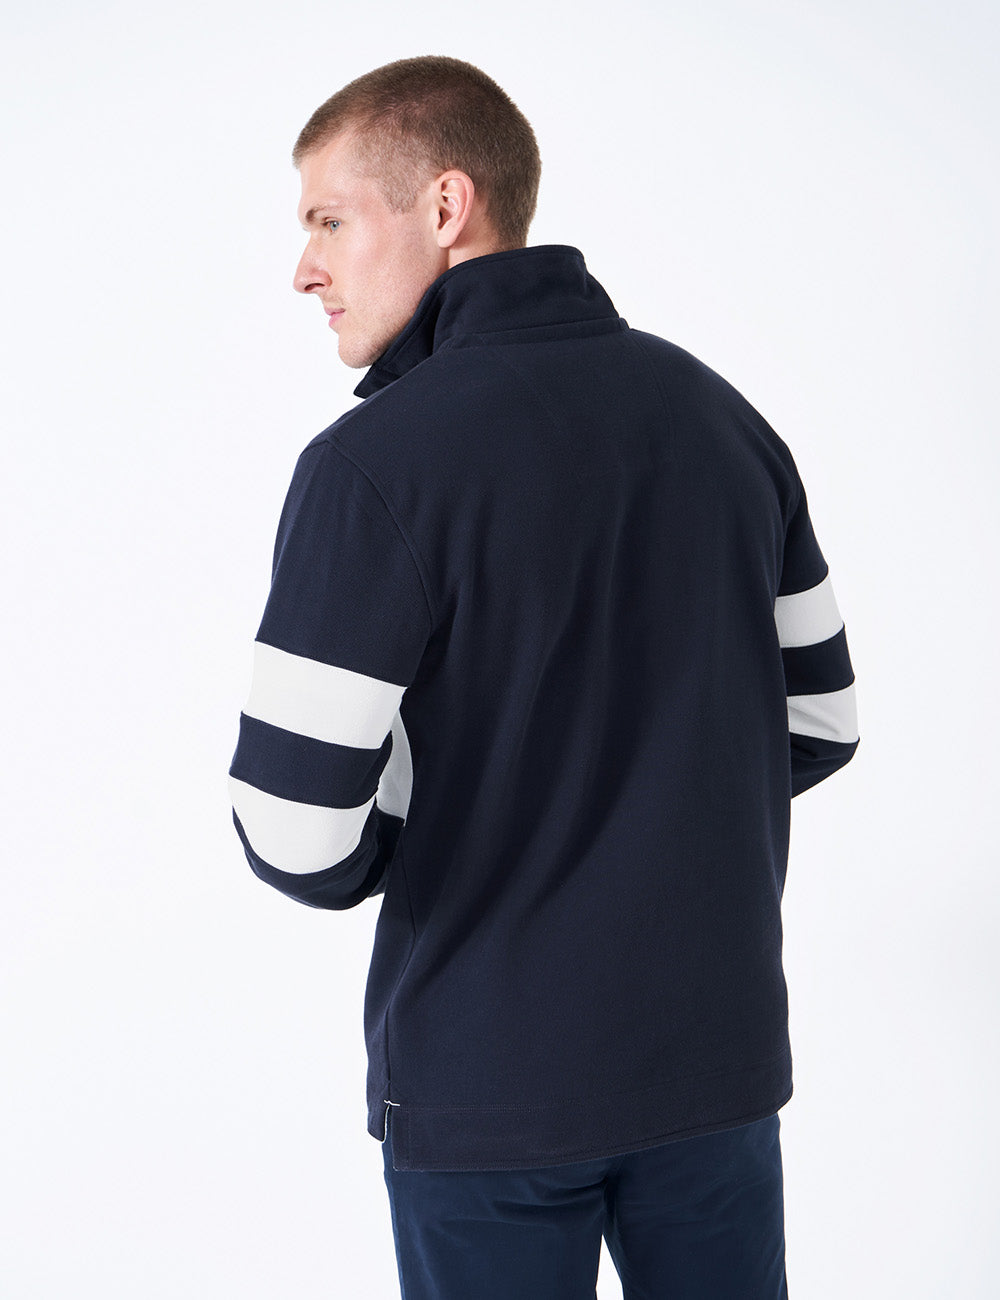 Crew Clothing Padstow Pique Sweatshirt - Navy/White Stripe